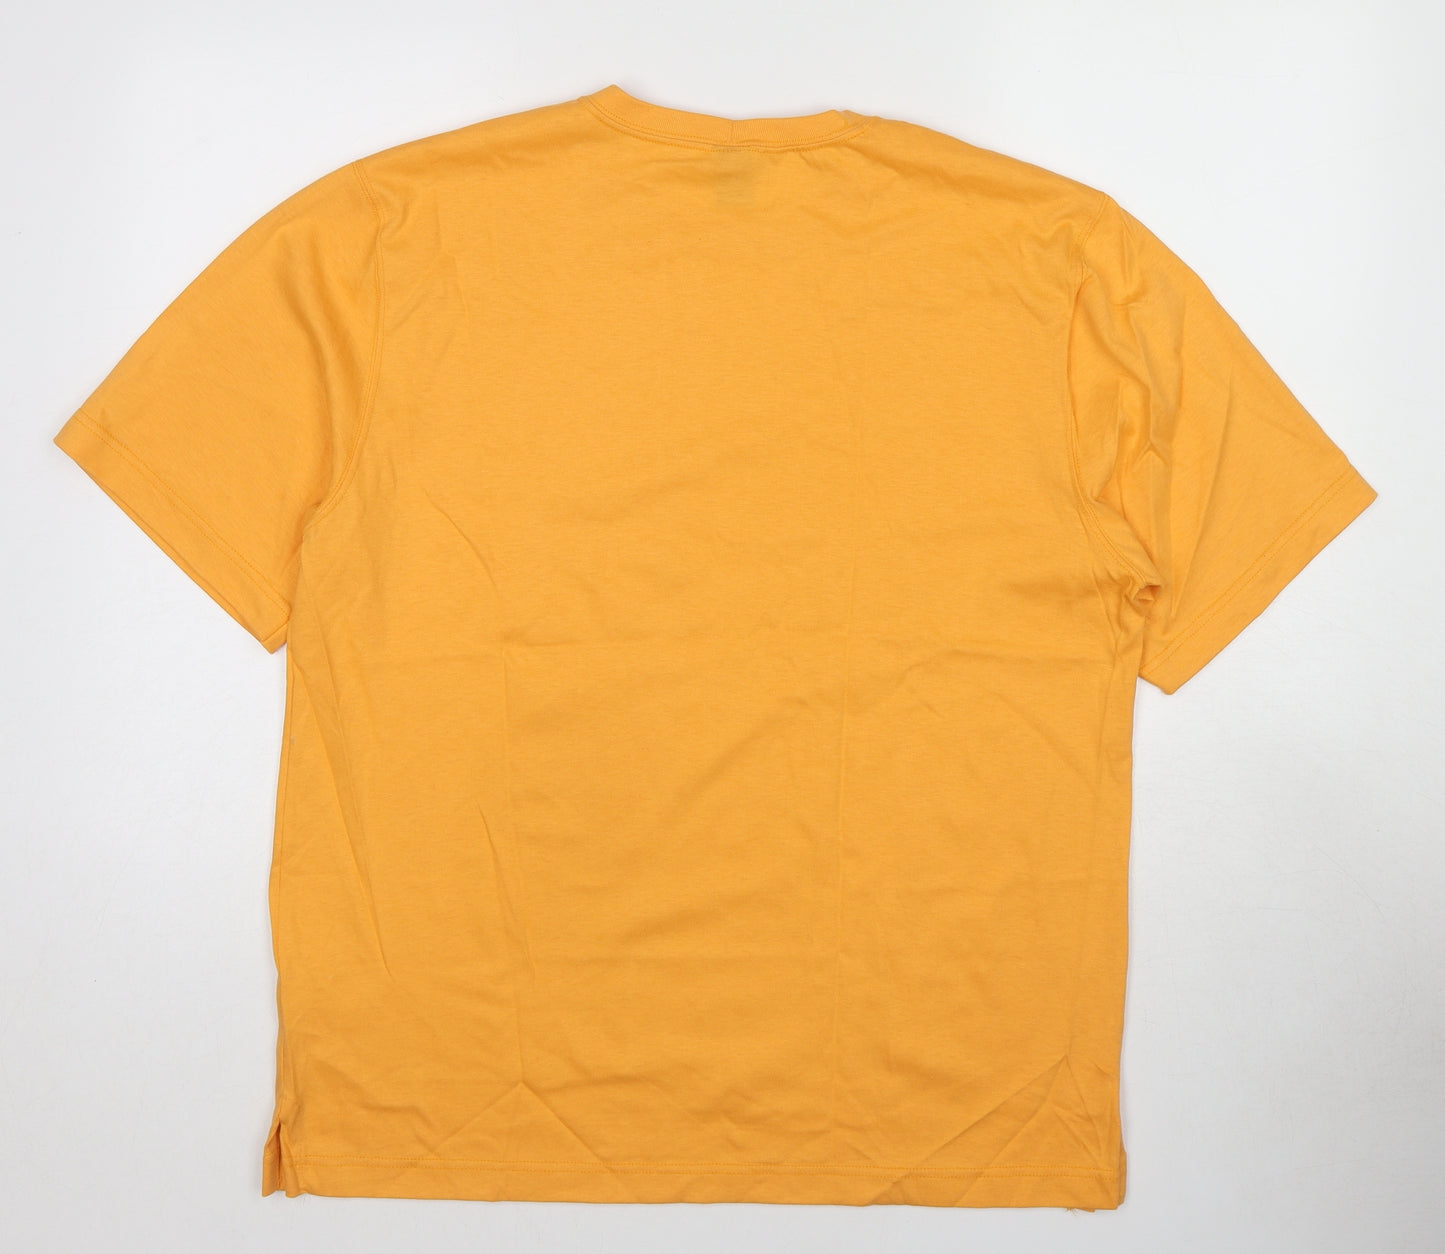 Lands' End Womens Orange Cotton Basic T-Shirt Size 14 Round Neck - Size 14-16